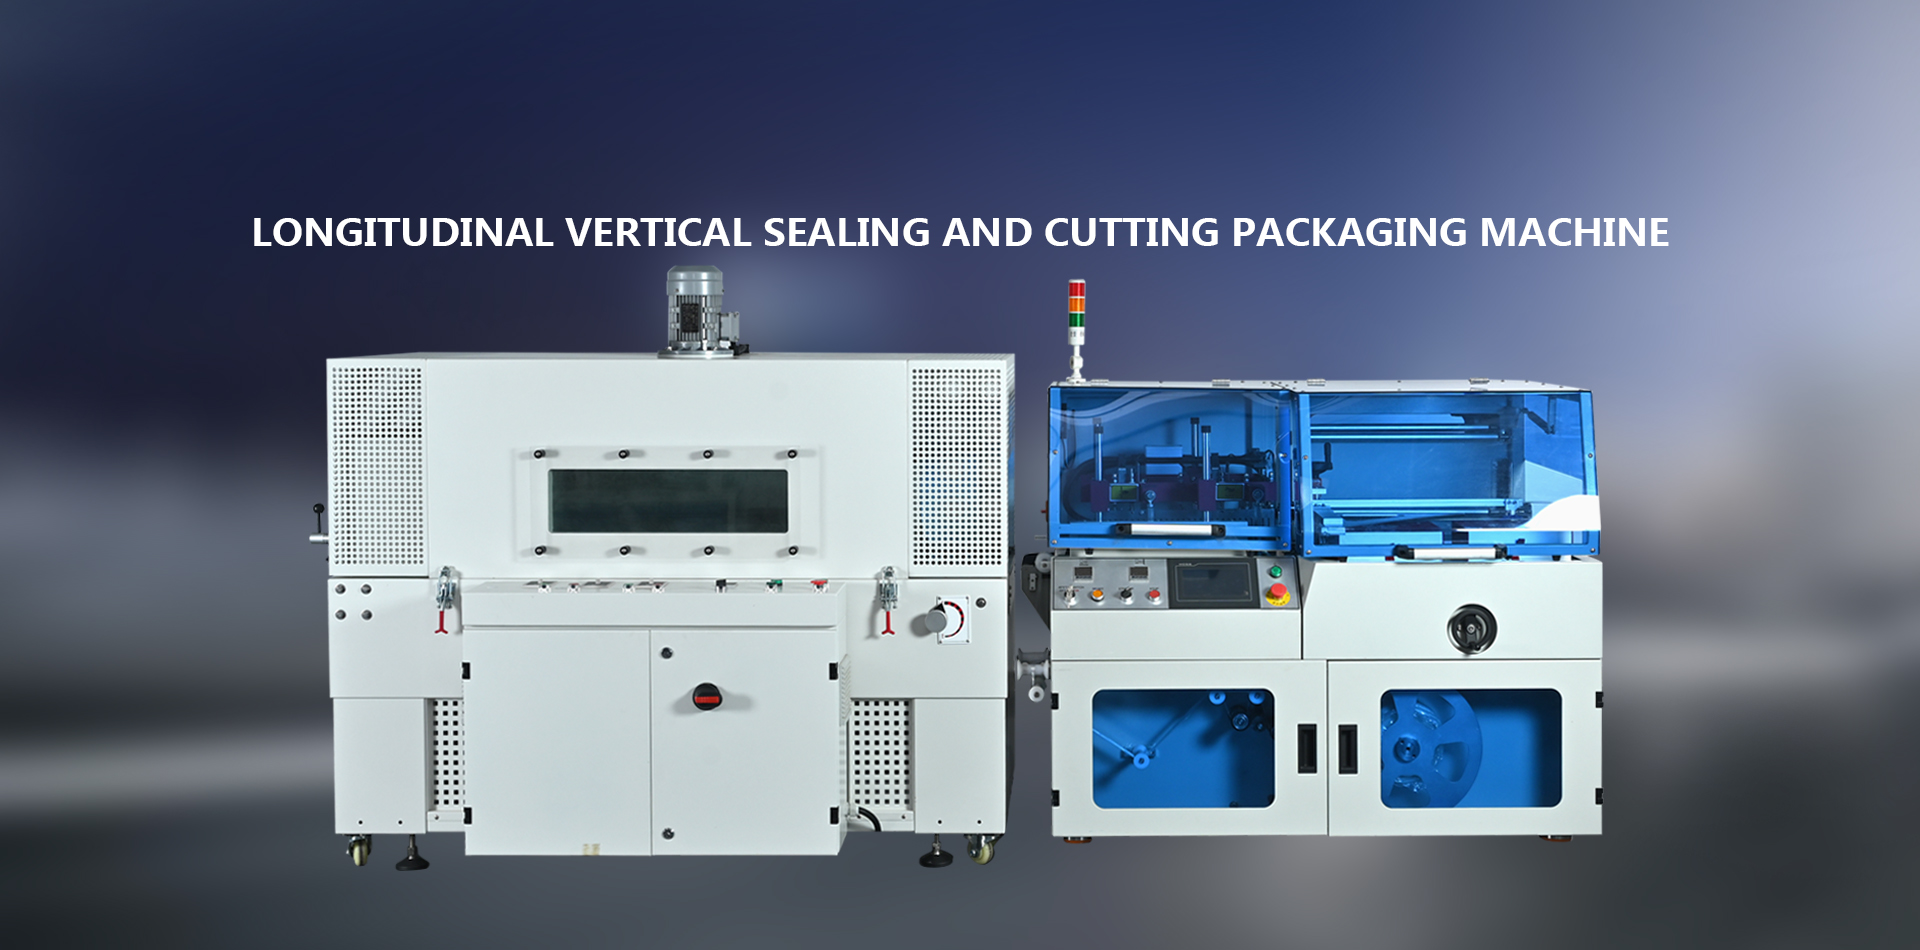 Longitudinal vertical sealing and cutting packaging machine